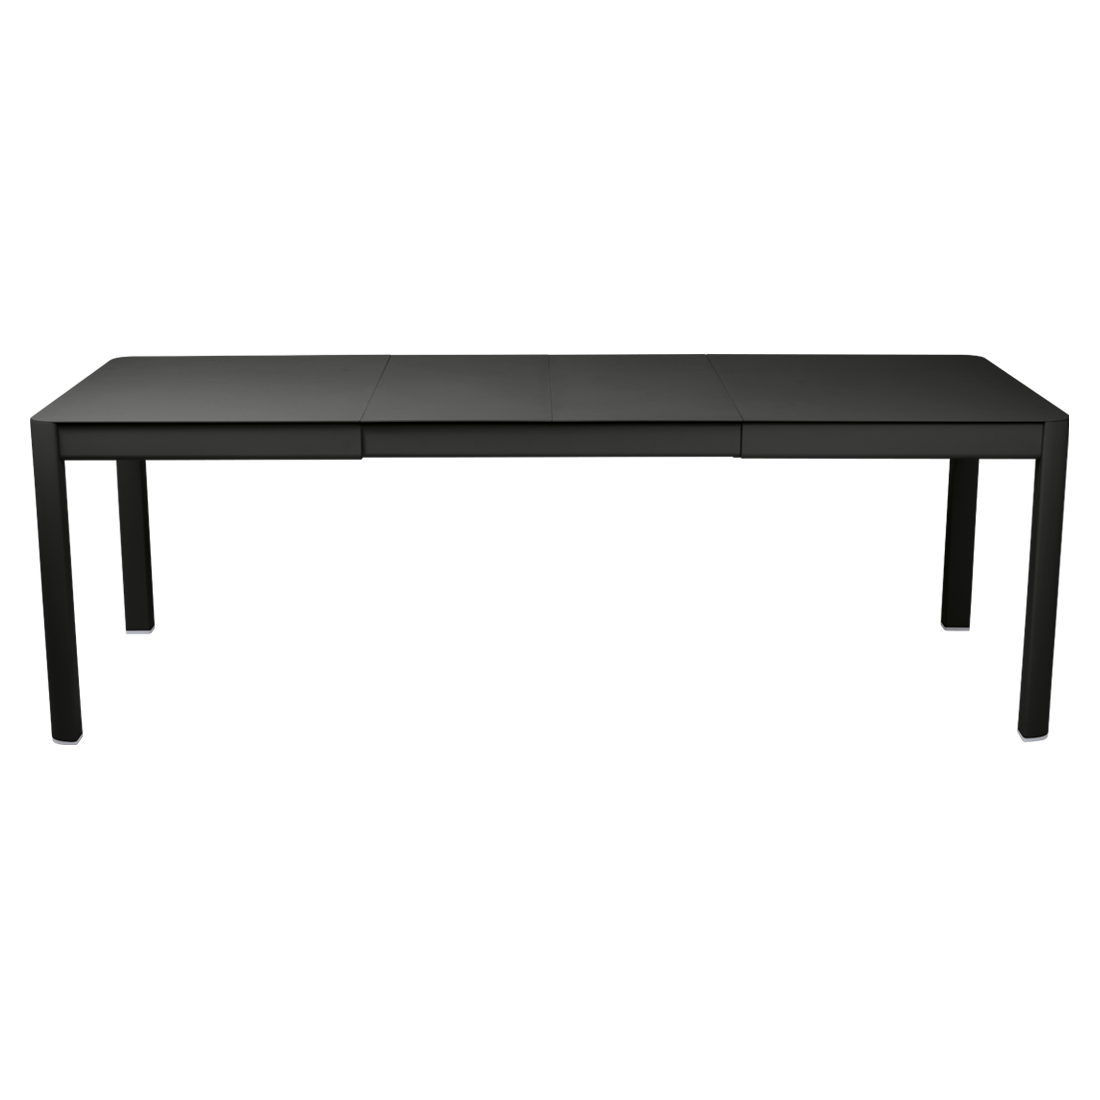 table de jardin noir, table metal allonge, table metal a rallonge, table metal rectangulaire, table fermob allonge